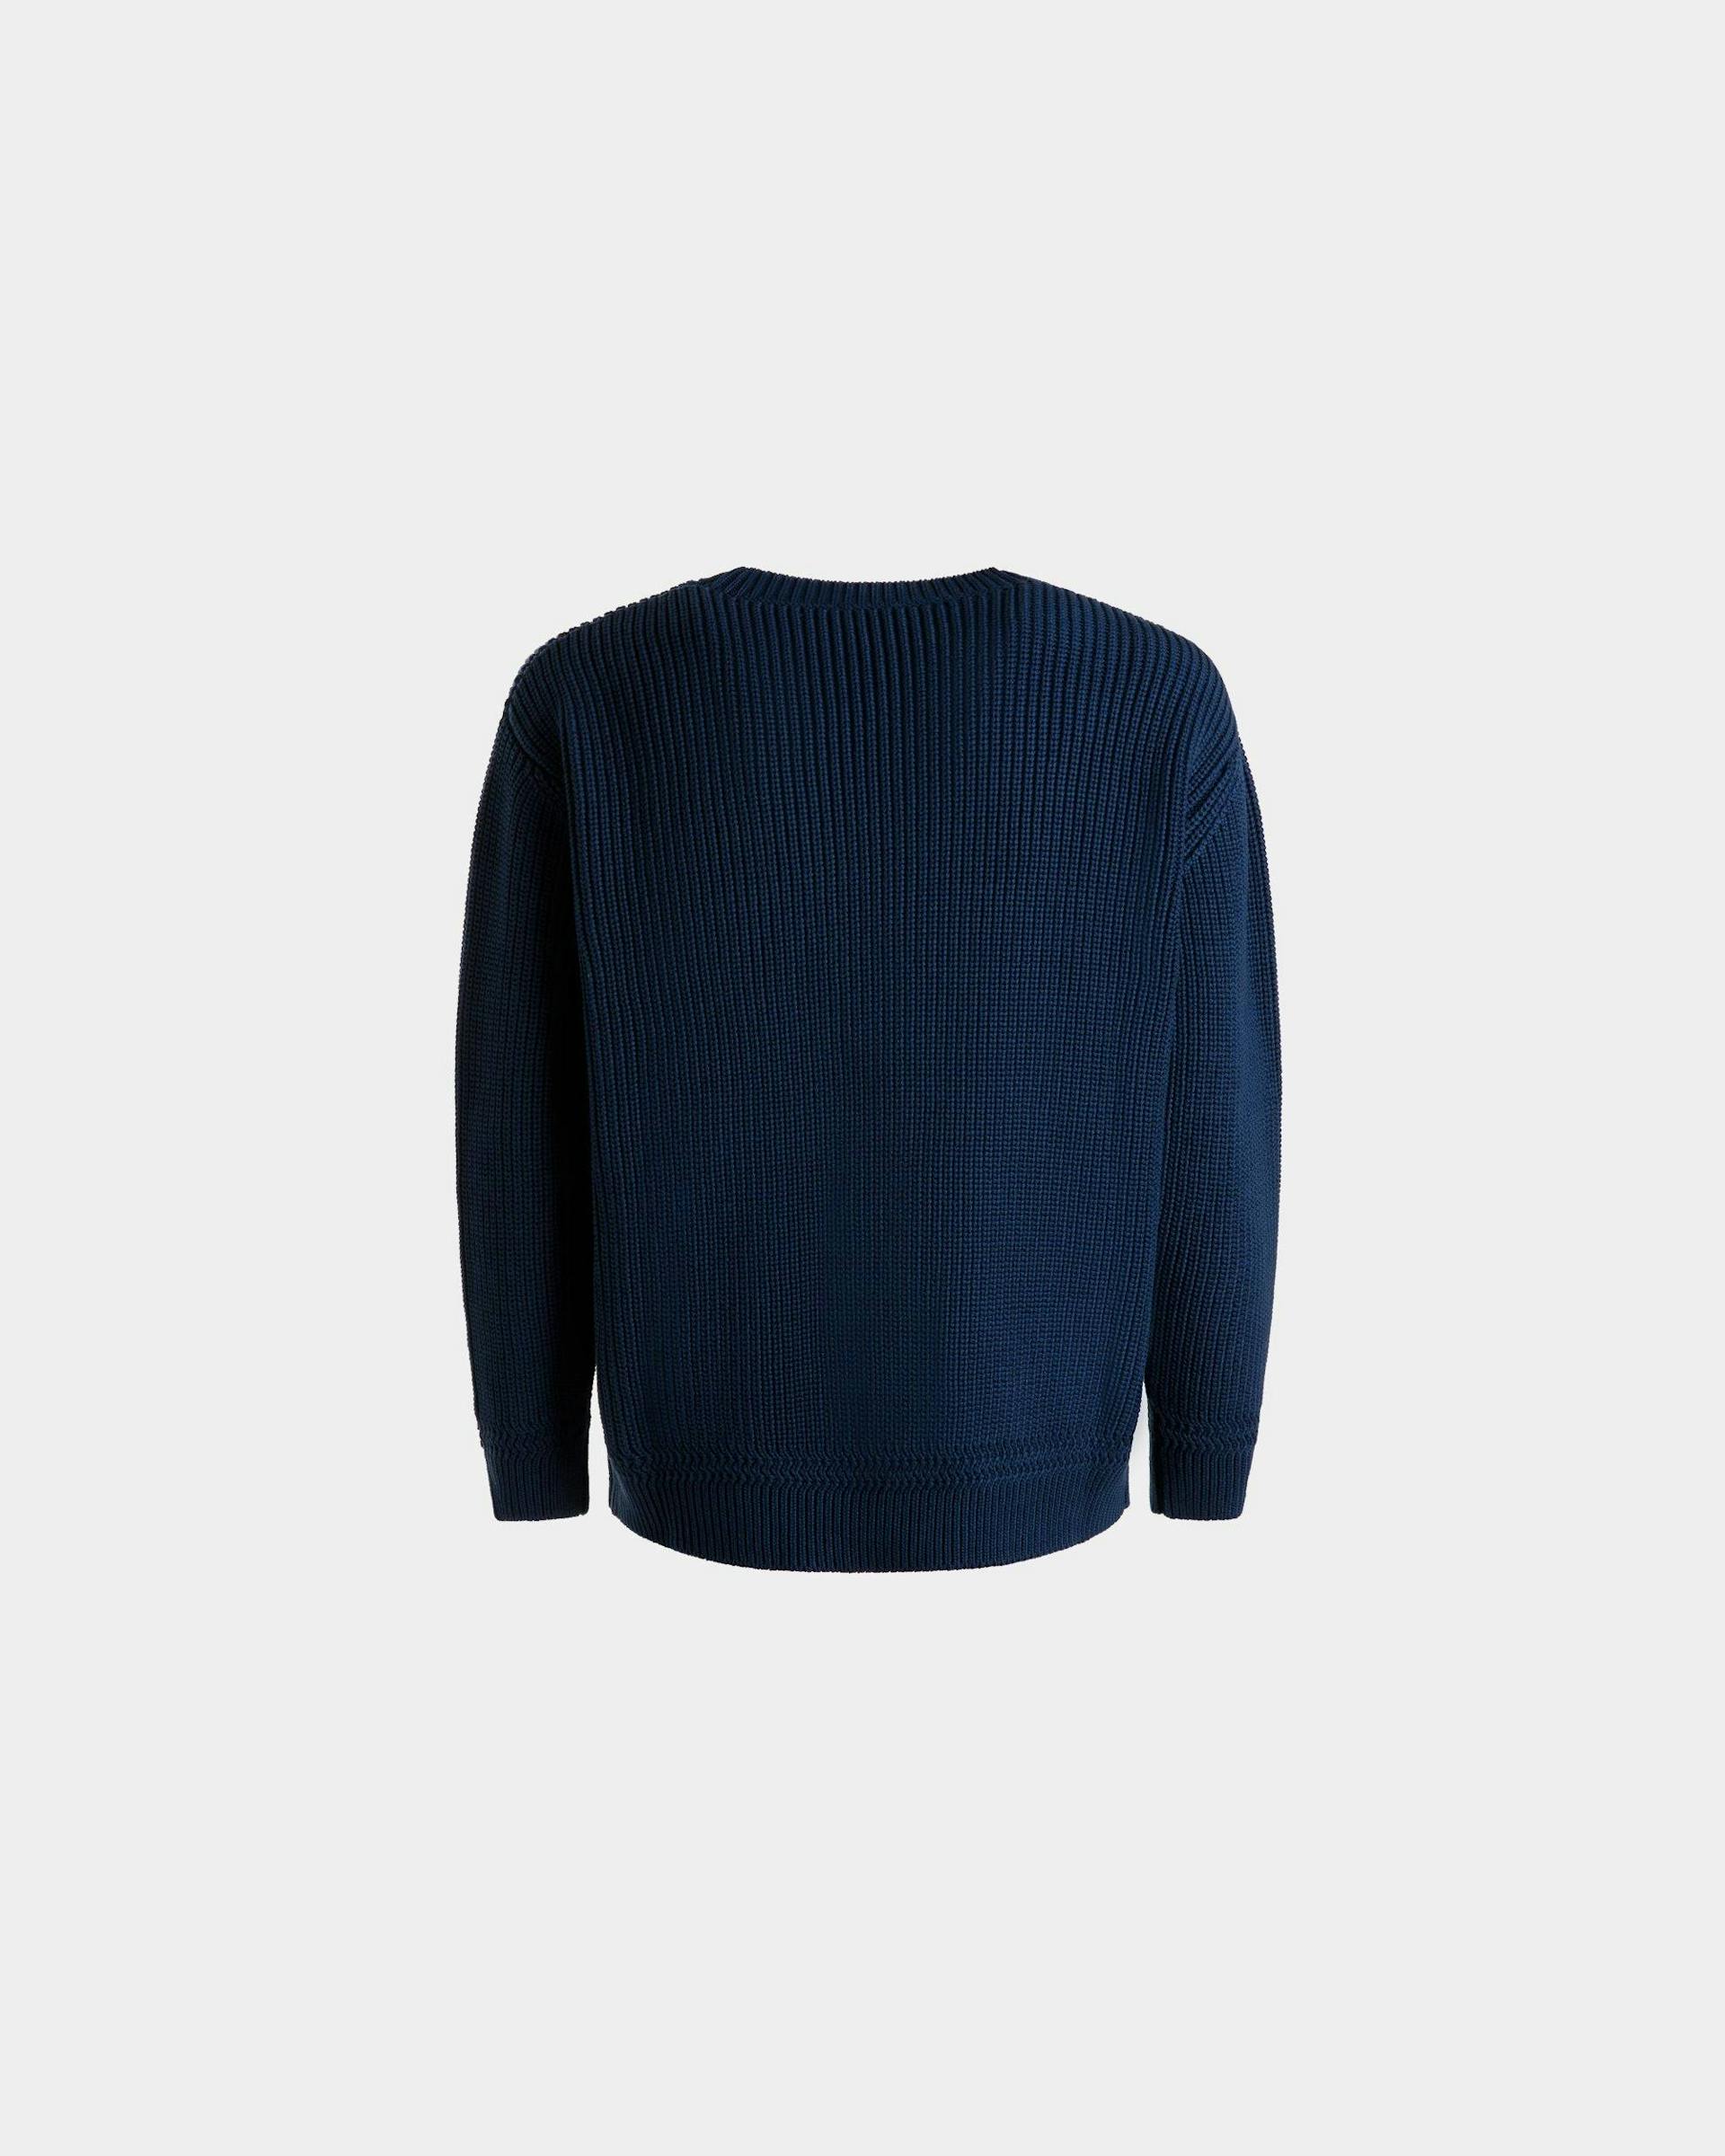 Men's Crewneck Sweater in Blue Cotton | Bally | Still Life Back